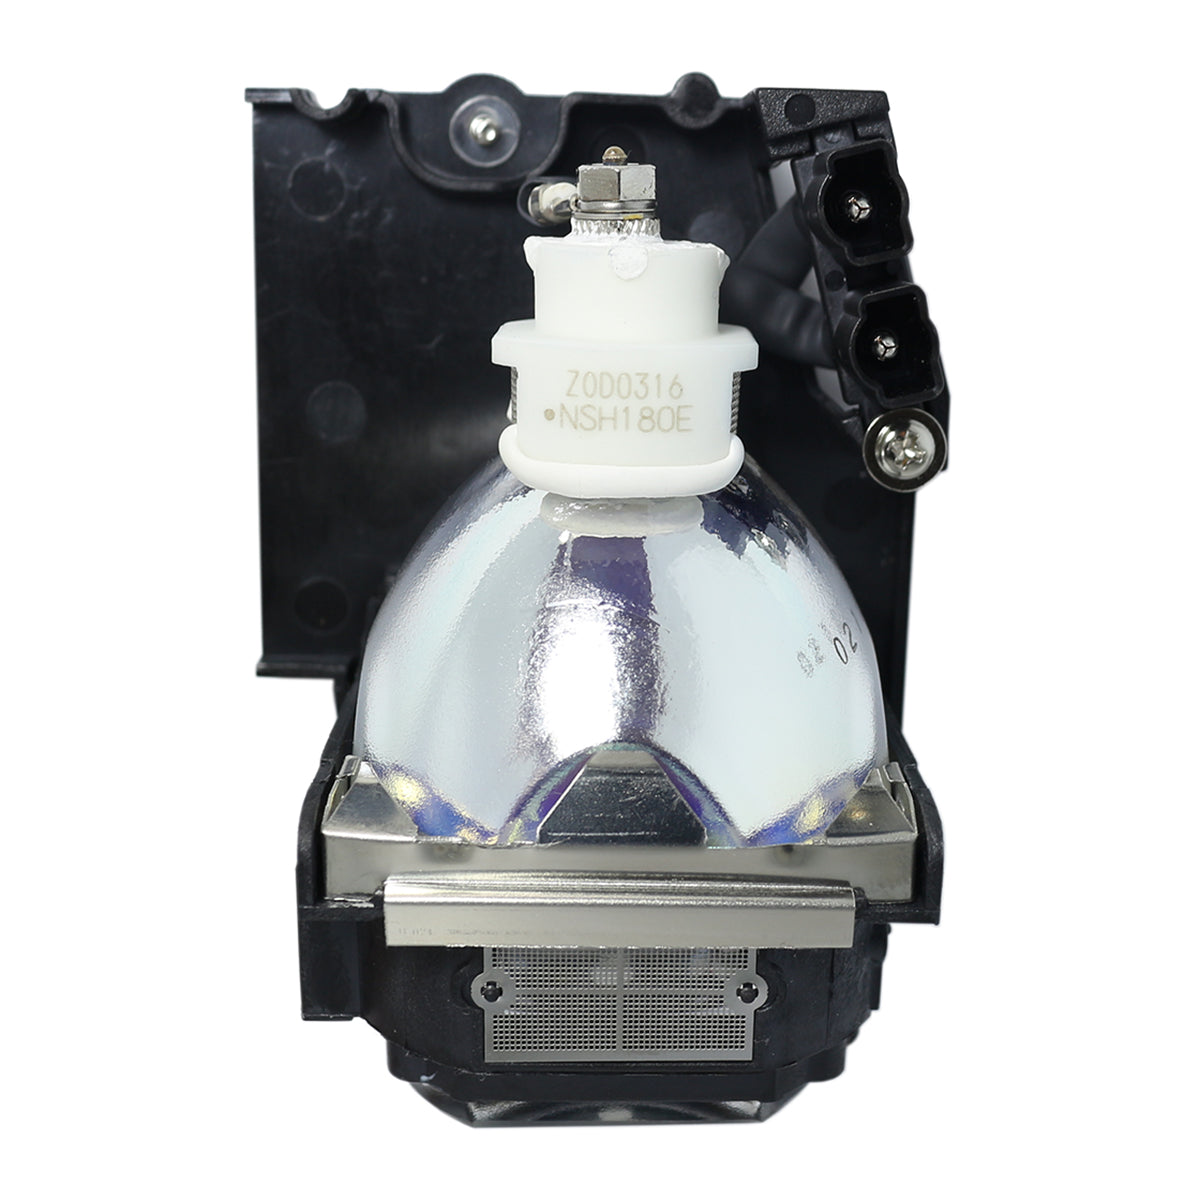 Geha 60-201905 Ushio Projector Lamp Module